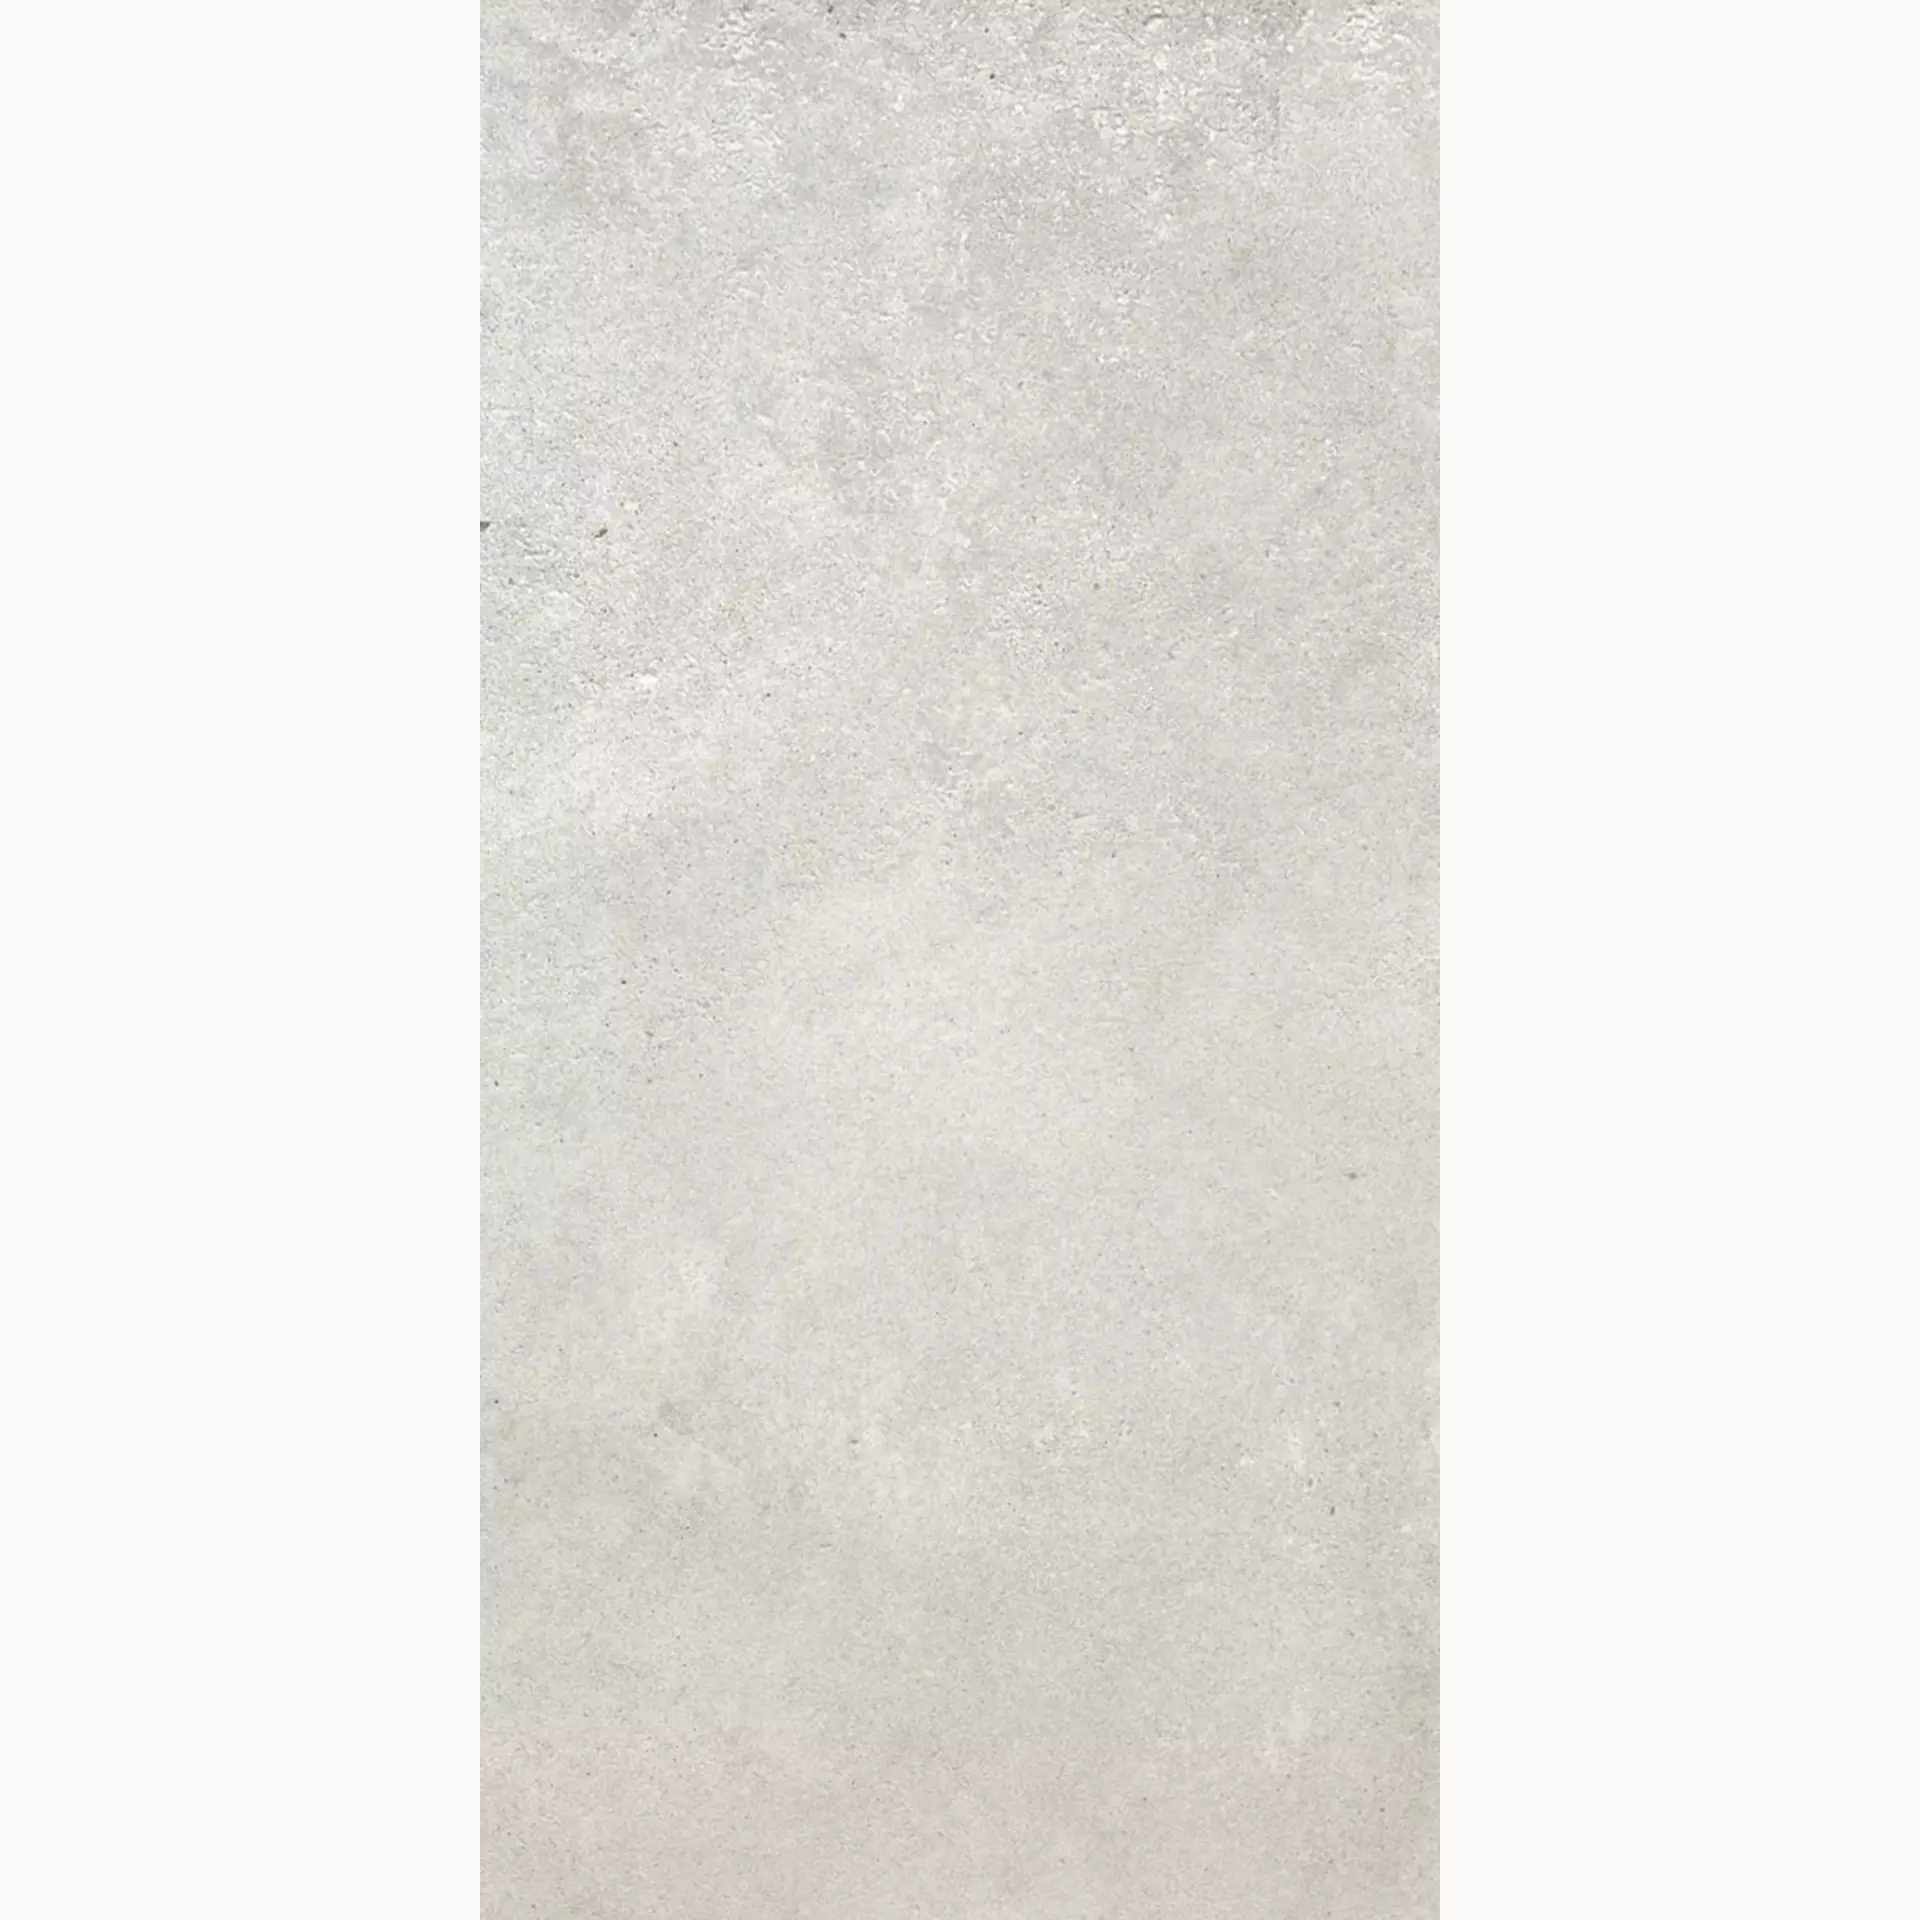 Rondine Loft White Naturale J89076 40x80cm rectified 8,5mm